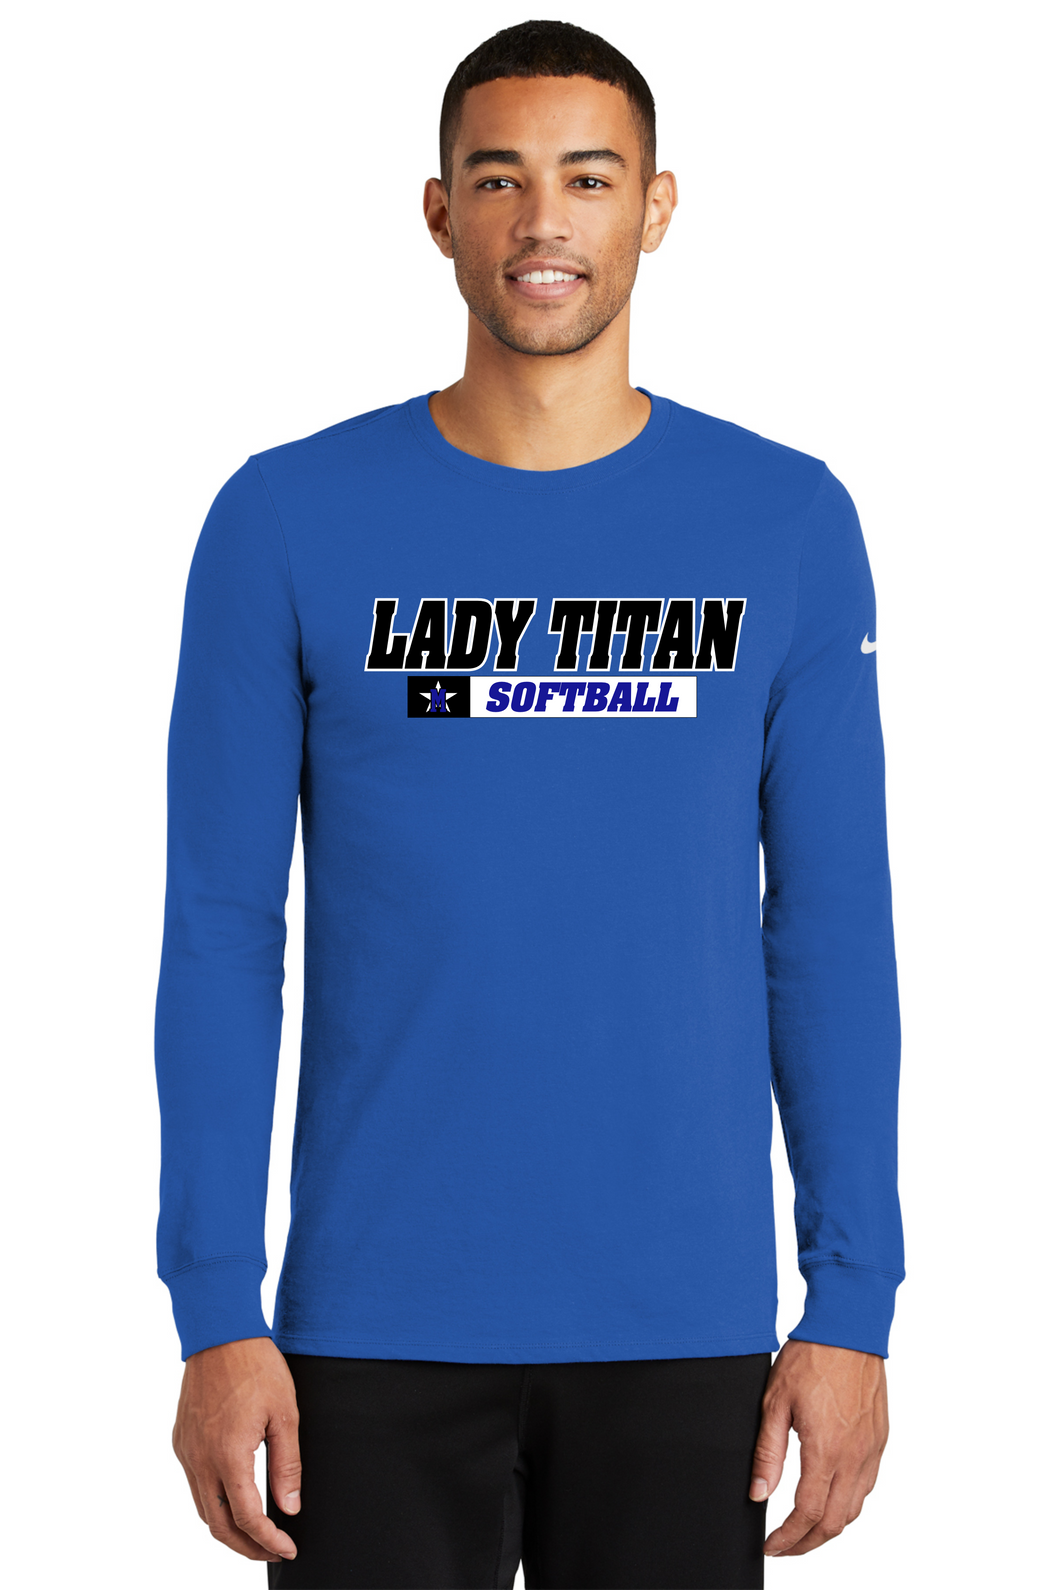 Lady Titans Softball Long Sleeve Nike Shirt